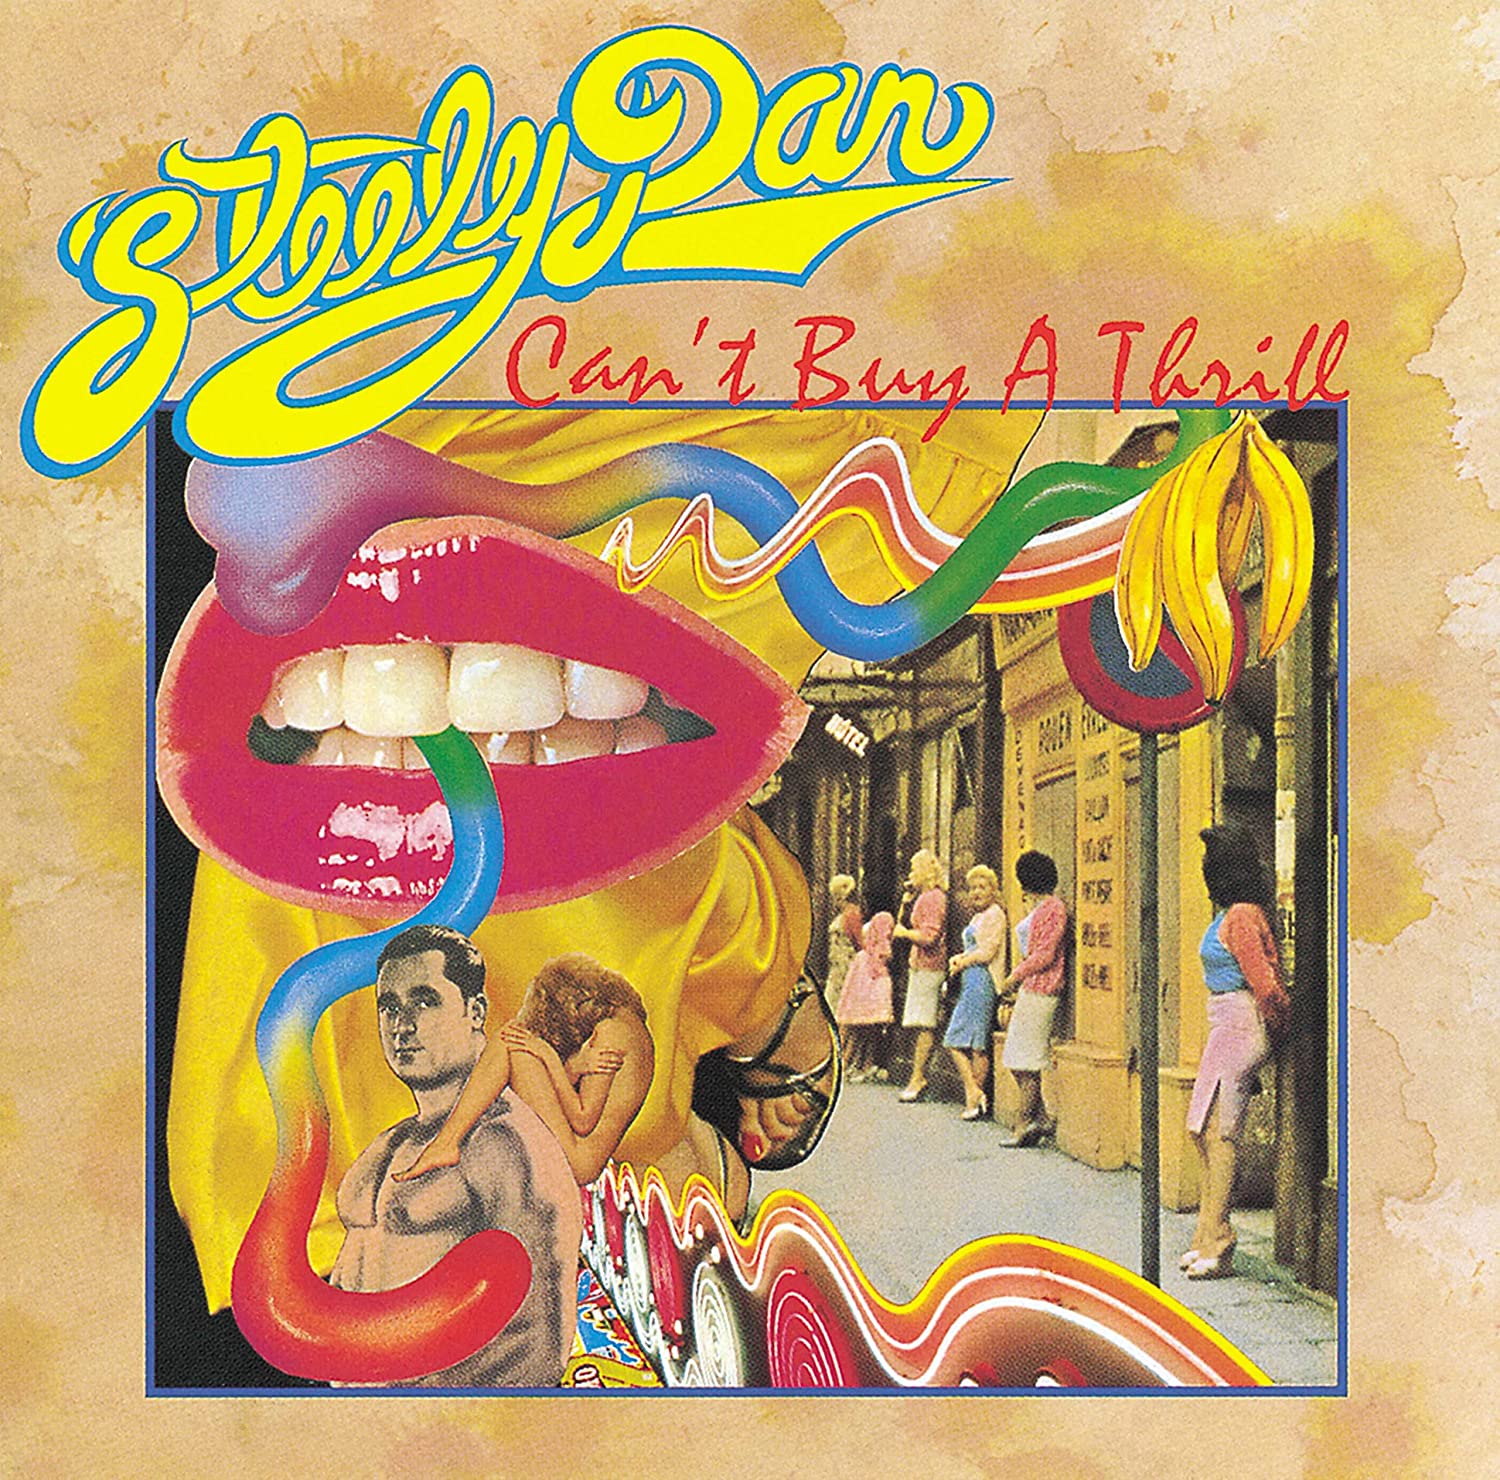 Steely Dan - Can't Buy a Thrill (Vinyl LP)